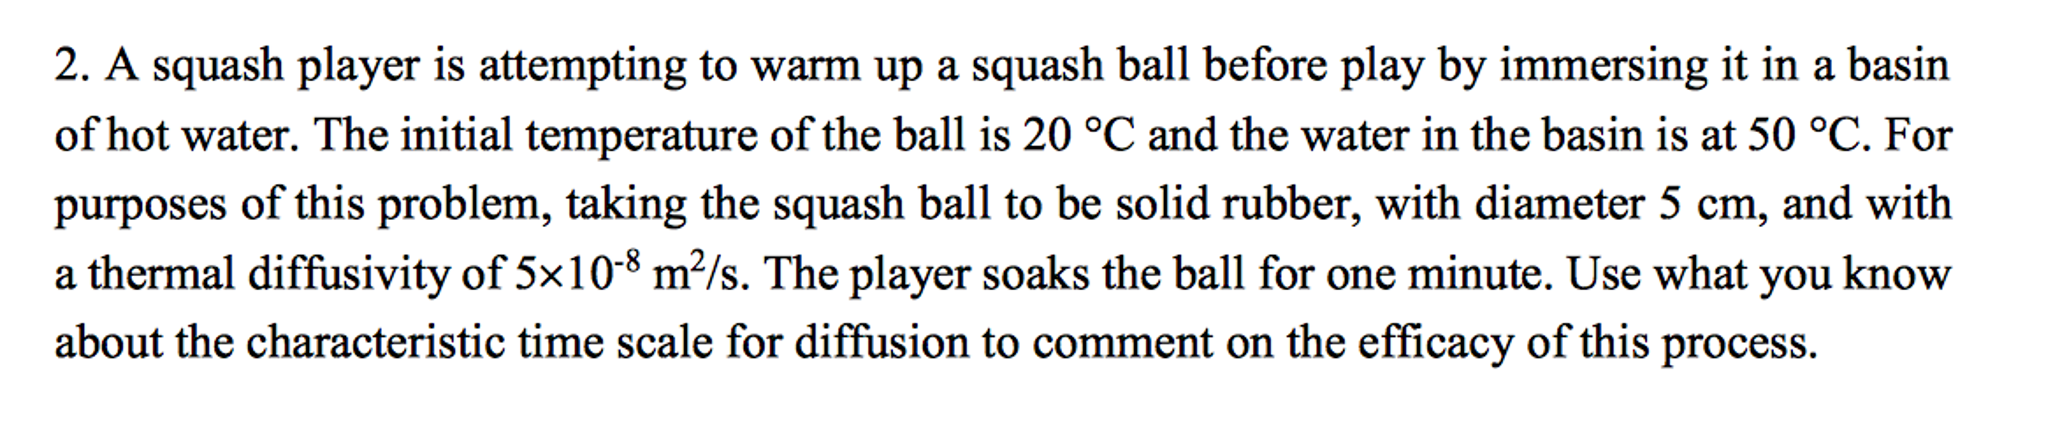 warm up squash ball